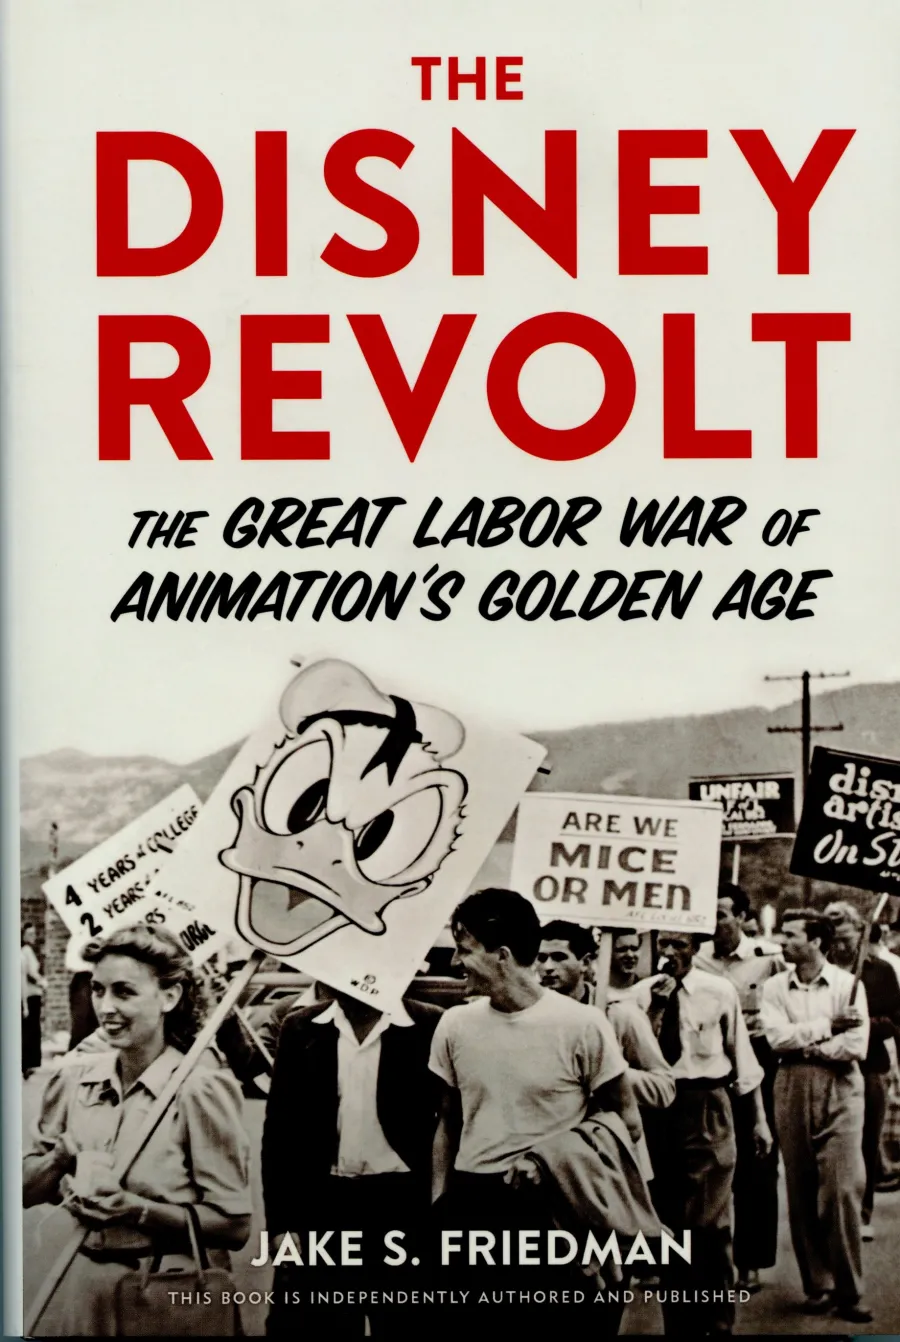 1941 Disney animators' strike for fair conditions